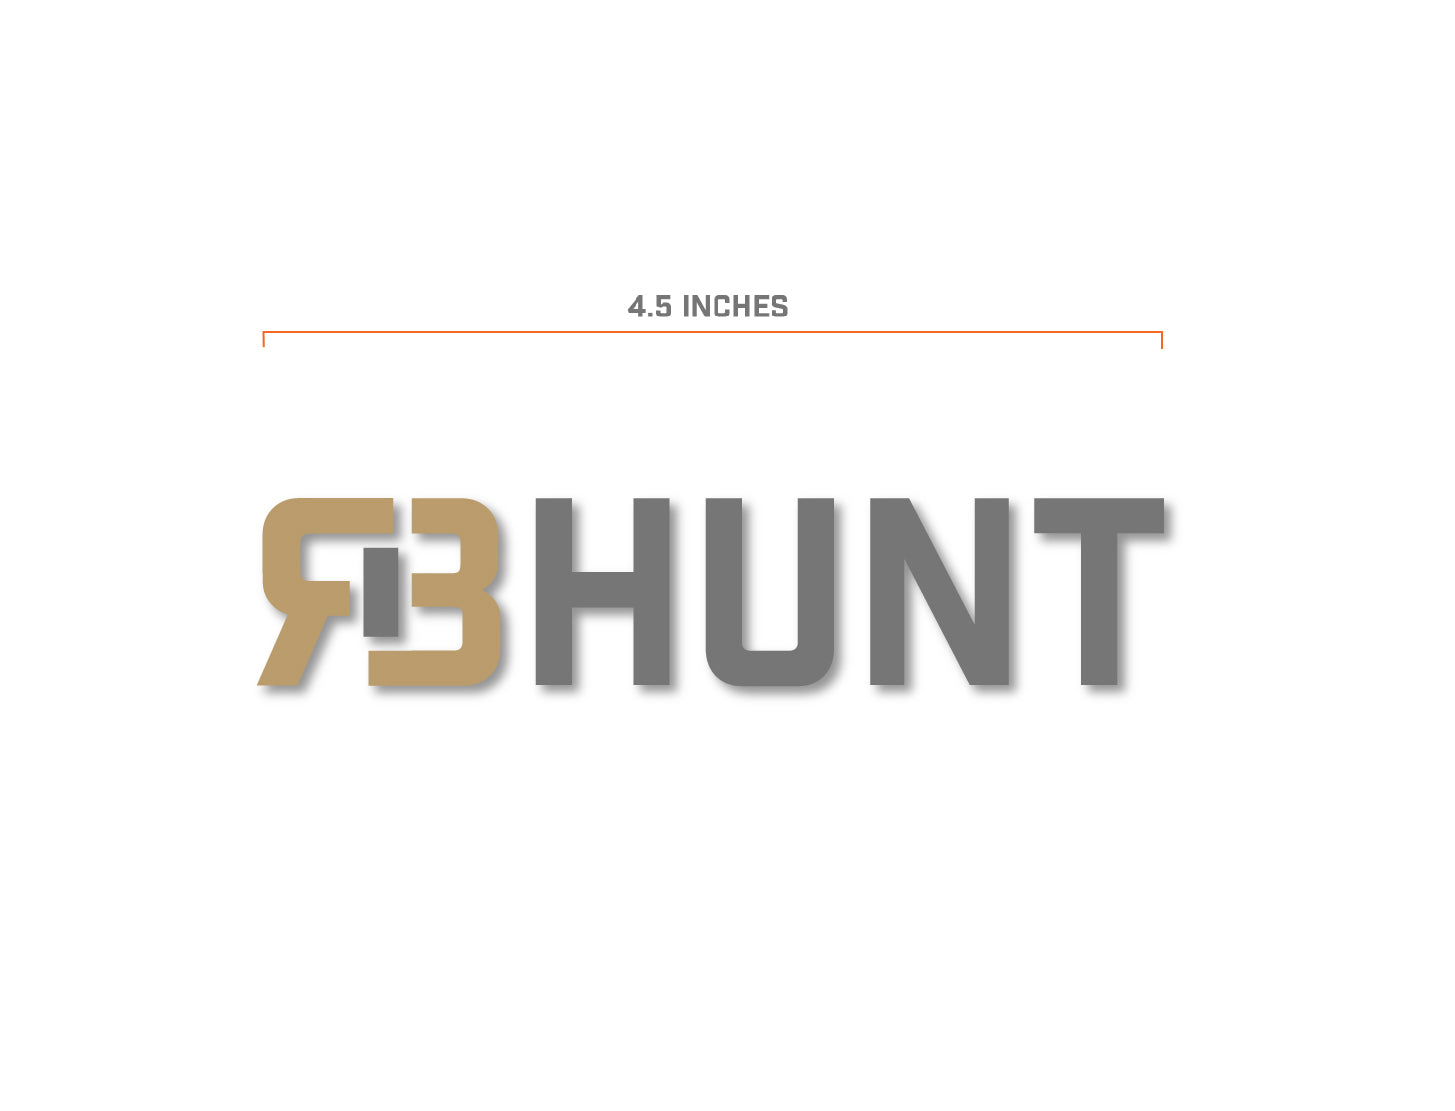 RB Hunt Vinyl